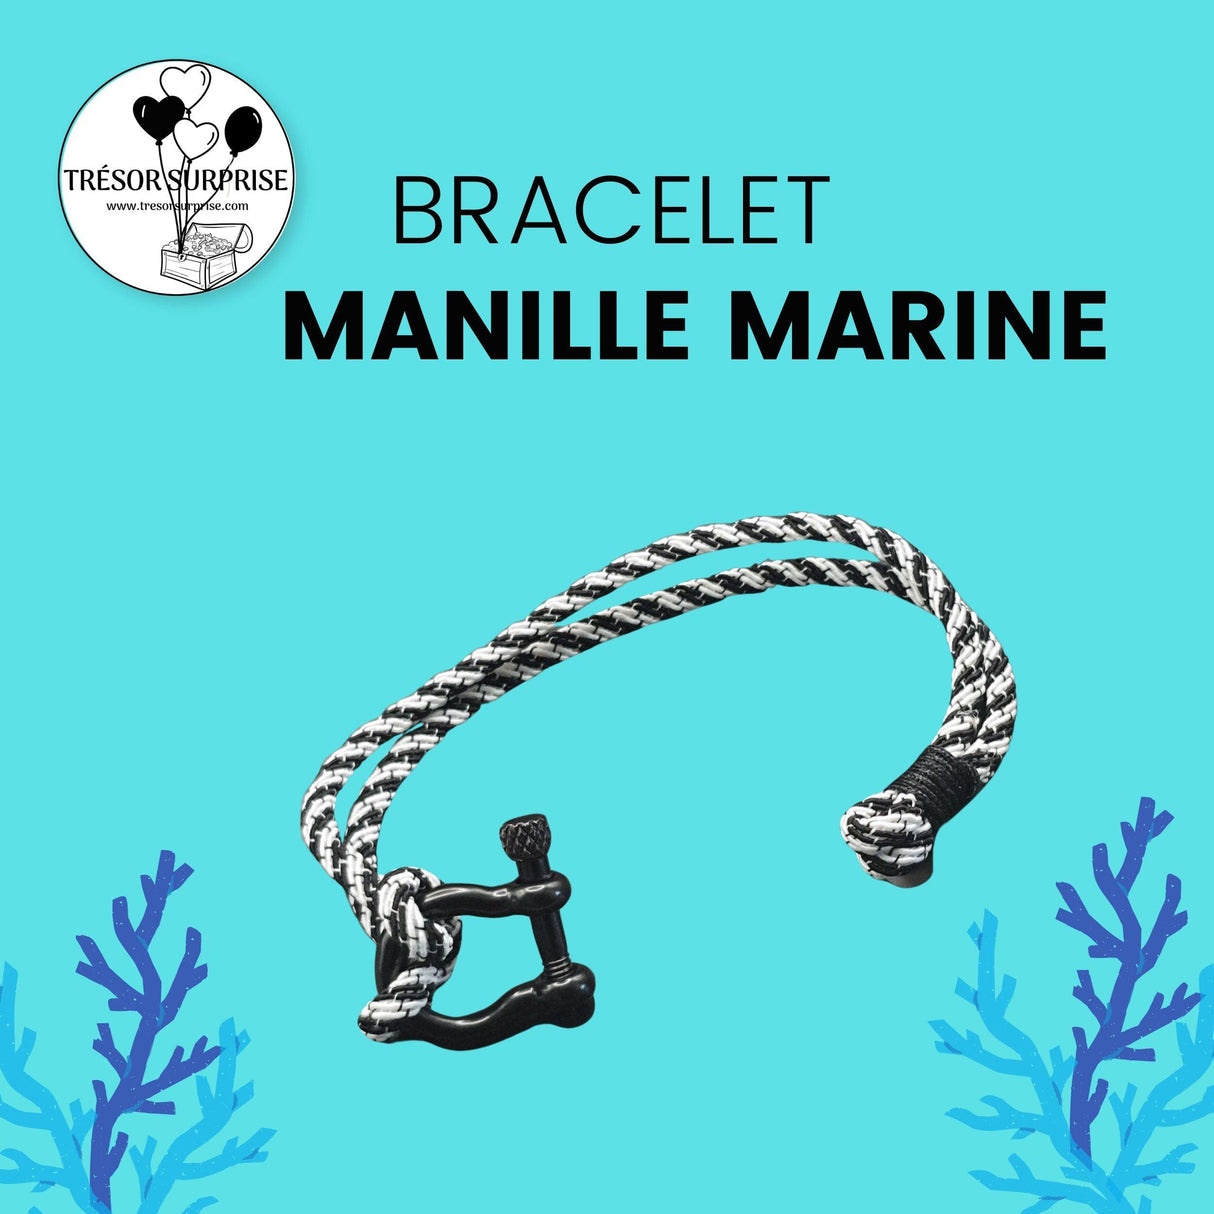 BRACELET MANILLE MARINE - TRÉSOR SURPRISE